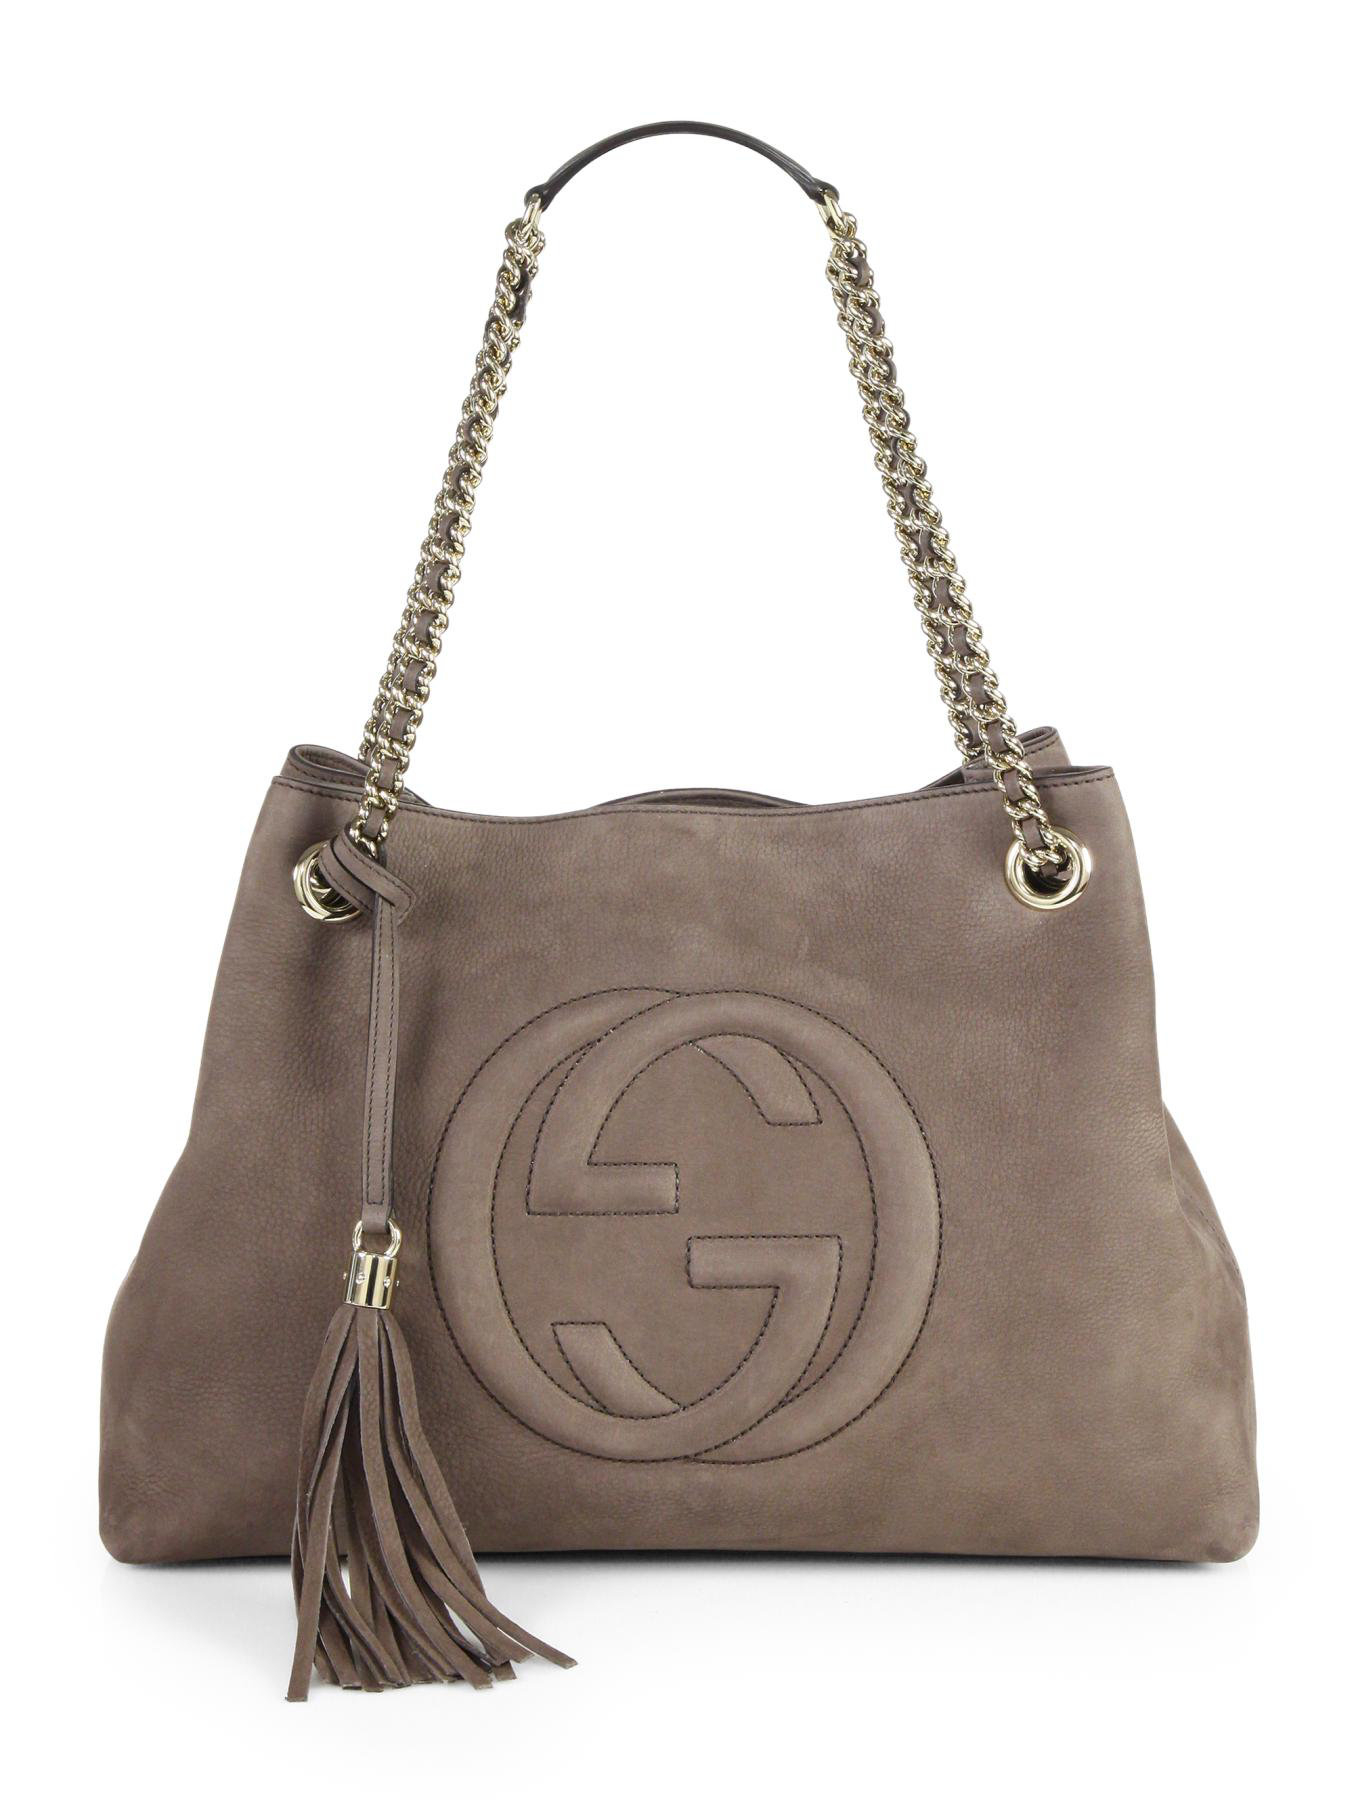 Gucci Soho Suede Shoulder Bag in Grey (Gray) - Lyst